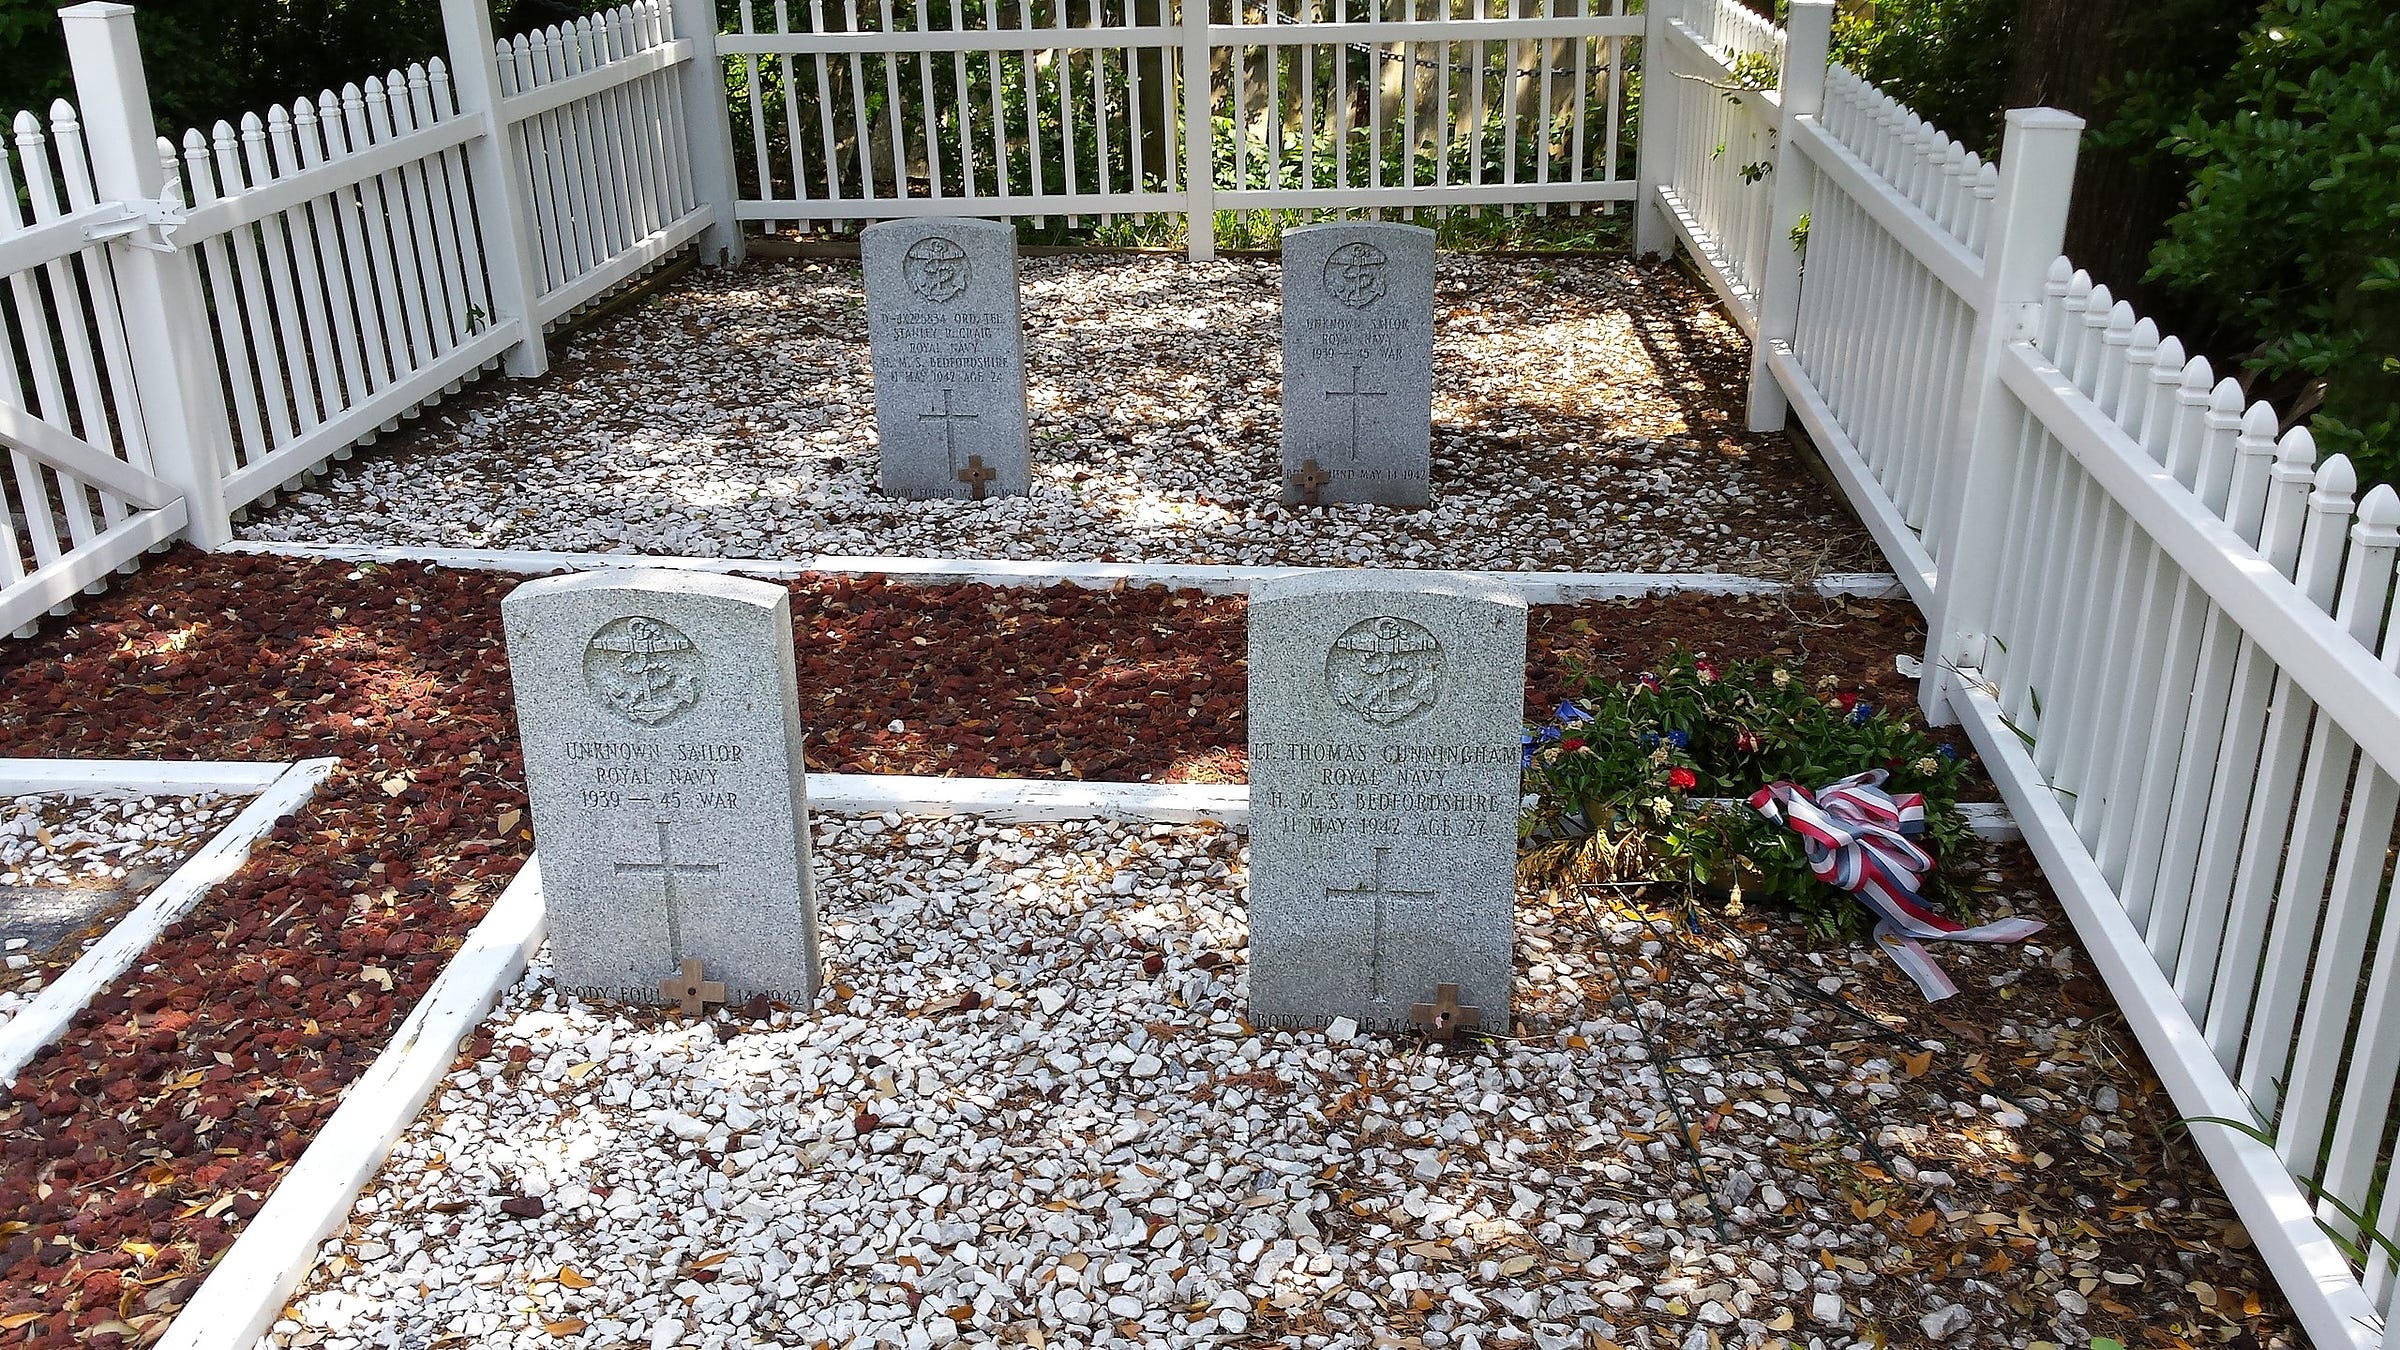 https://upload.wikimedia.org/wikipedia/commons/thumb/5/5e/British_Cemetery%2C_Ocracoke_Island%2C_North_Carolina_image_3.jpg/2560px-British_Cemetery%2C_Ocracoke_Island%2C_North_Carolina_image_3.jpg